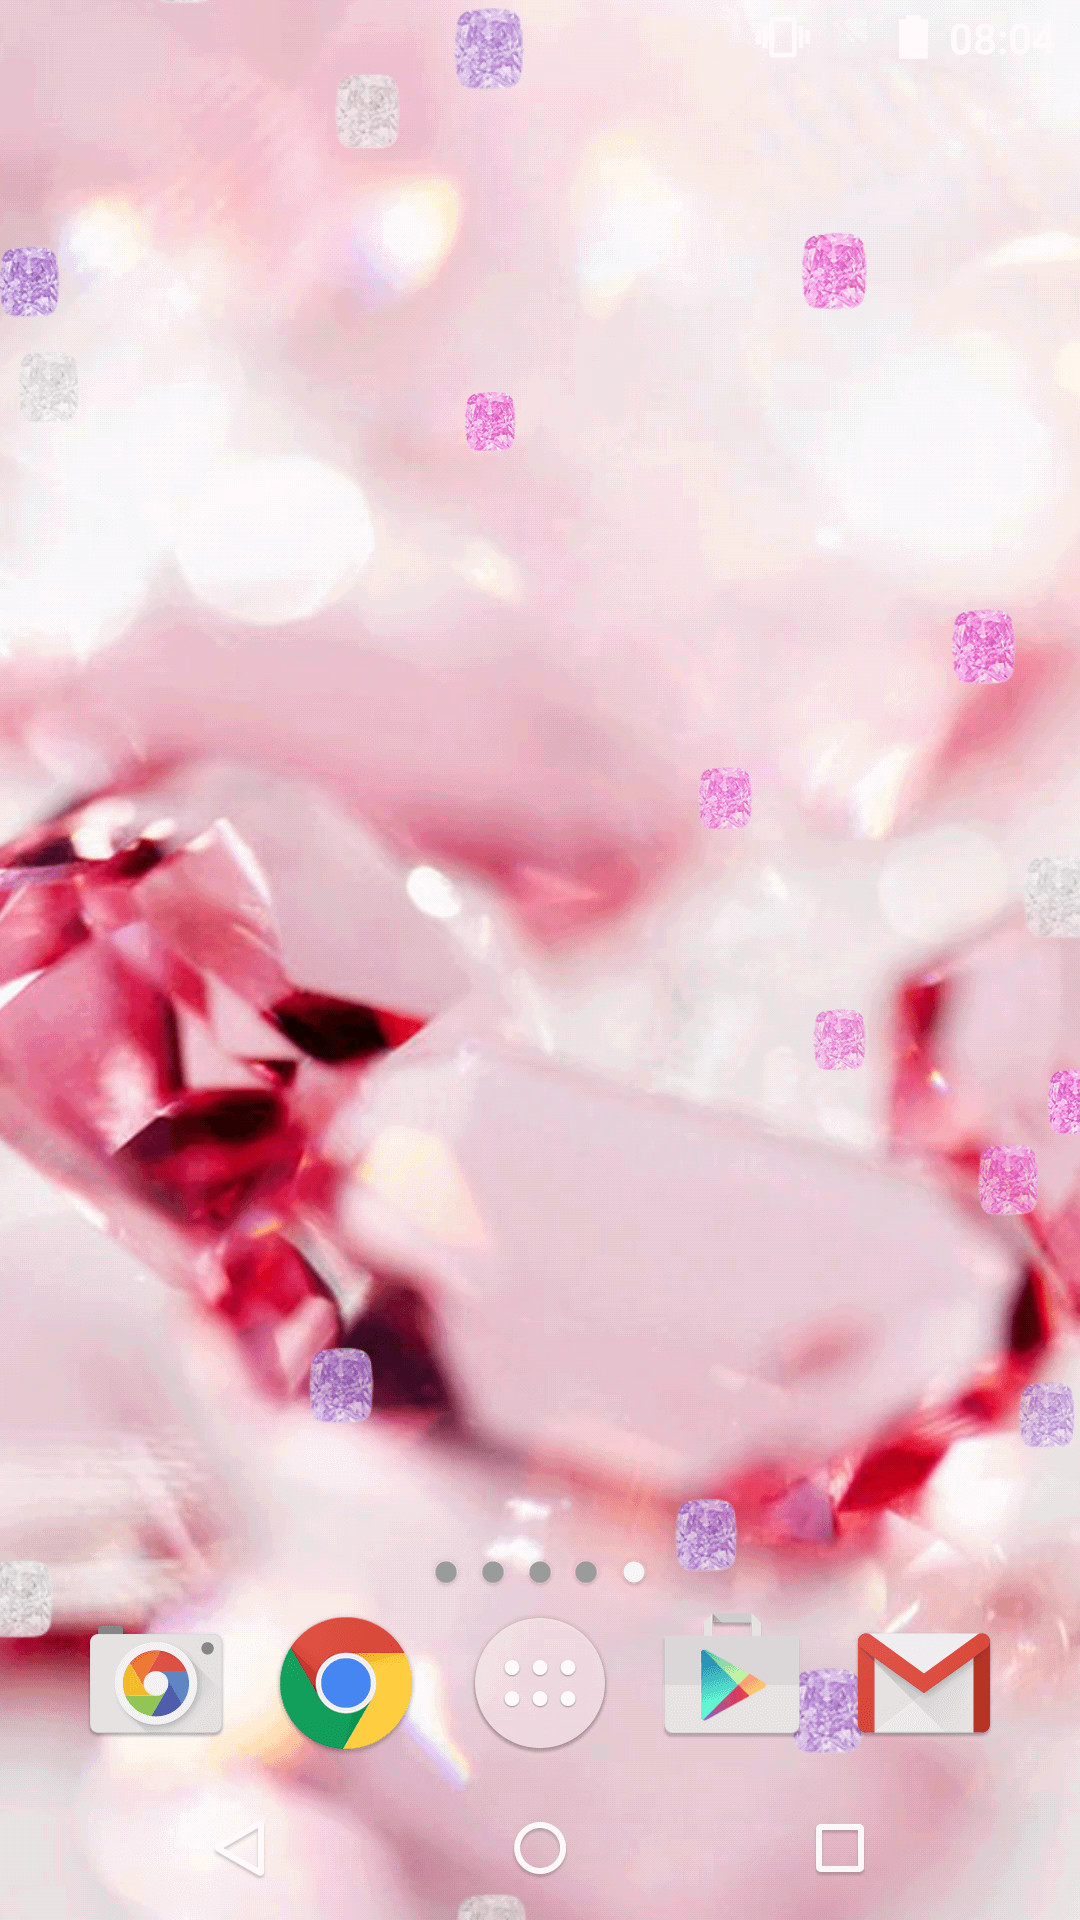 Pink Diamond Live Wallpaper